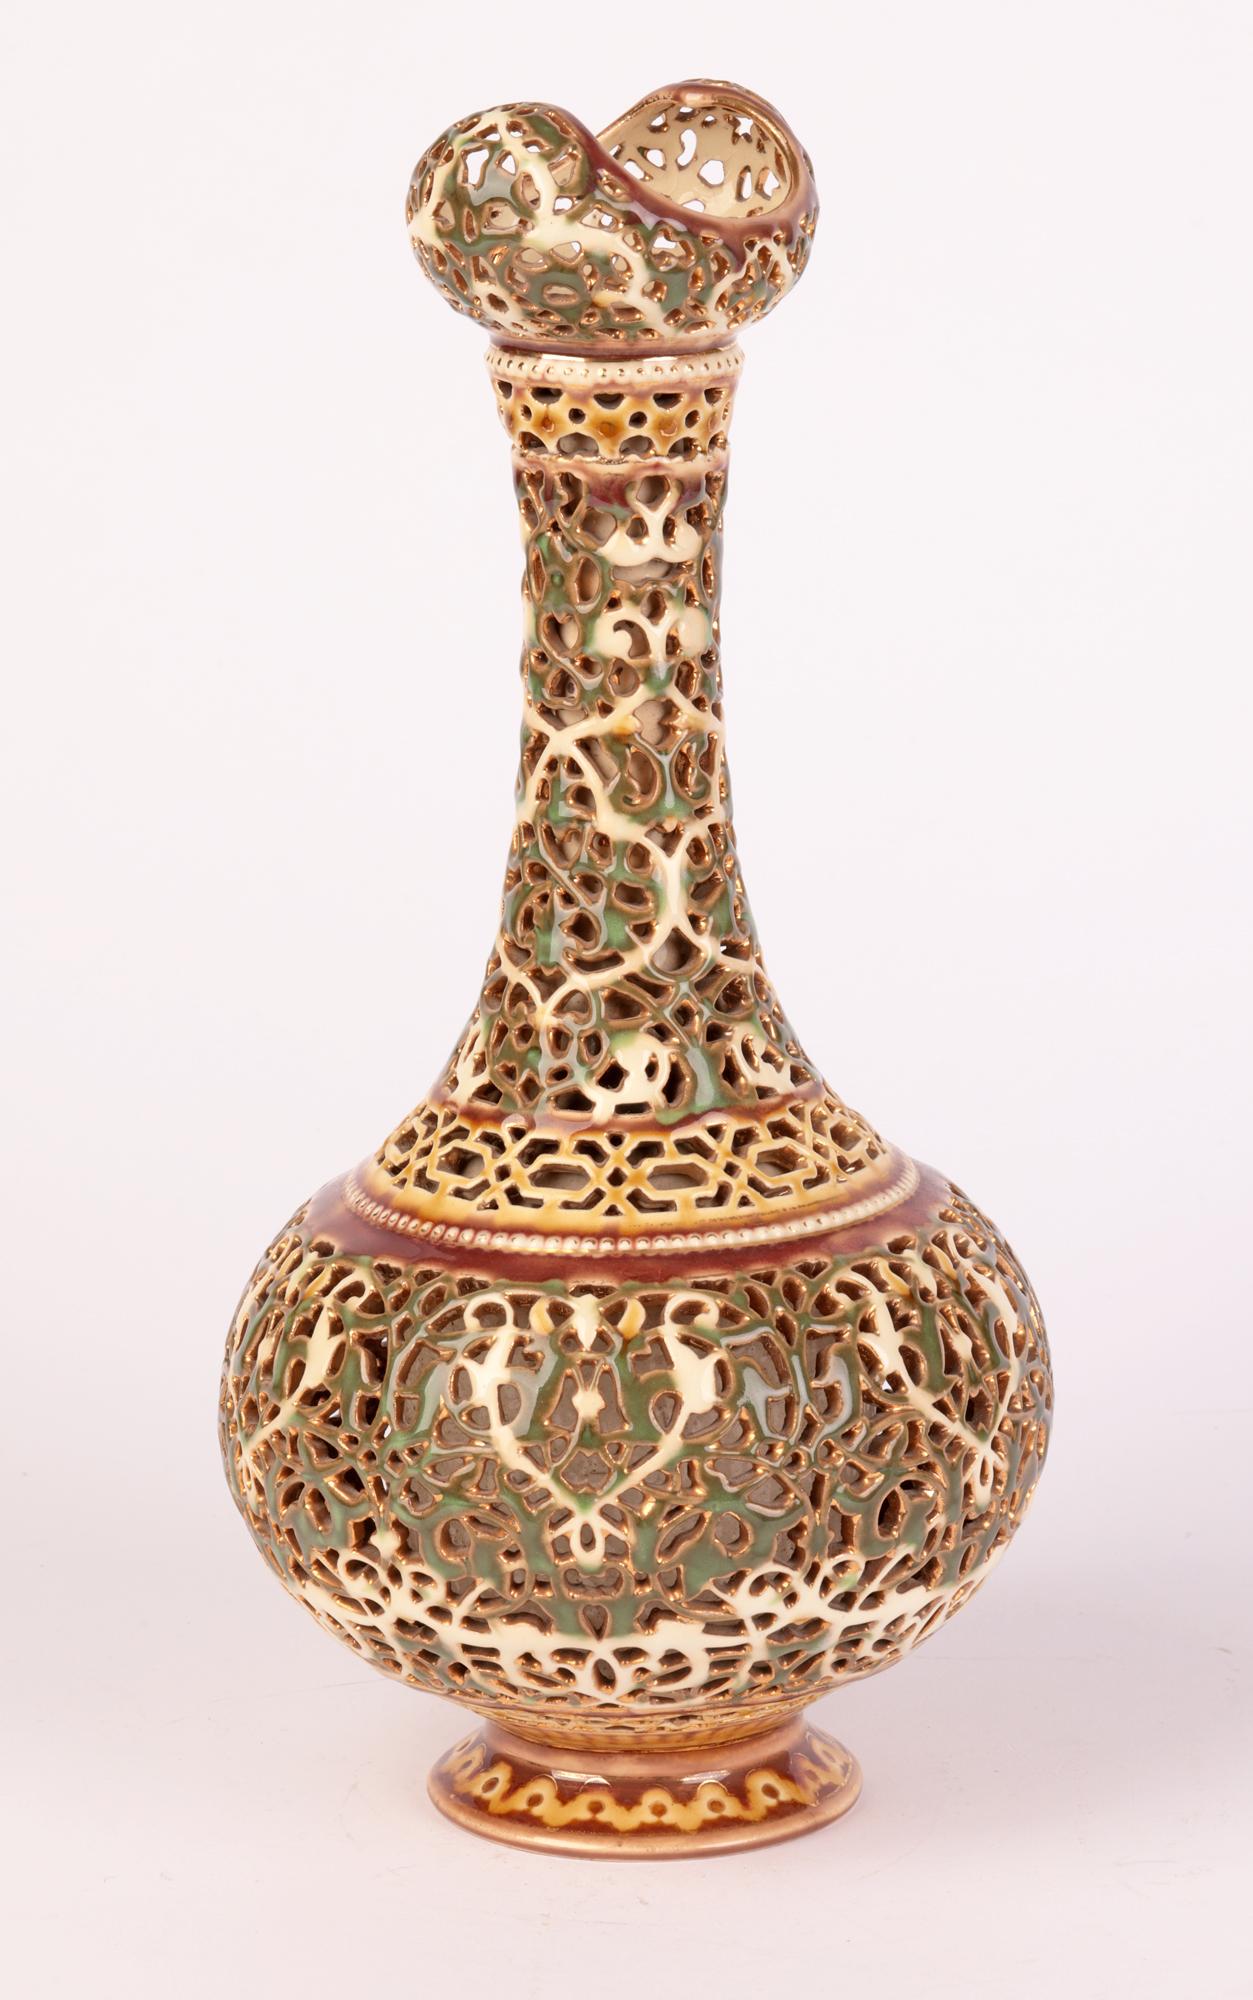 Ceramic Zsolnay Pecs Hungarian Islamic Influence Pierced Pattern Vase